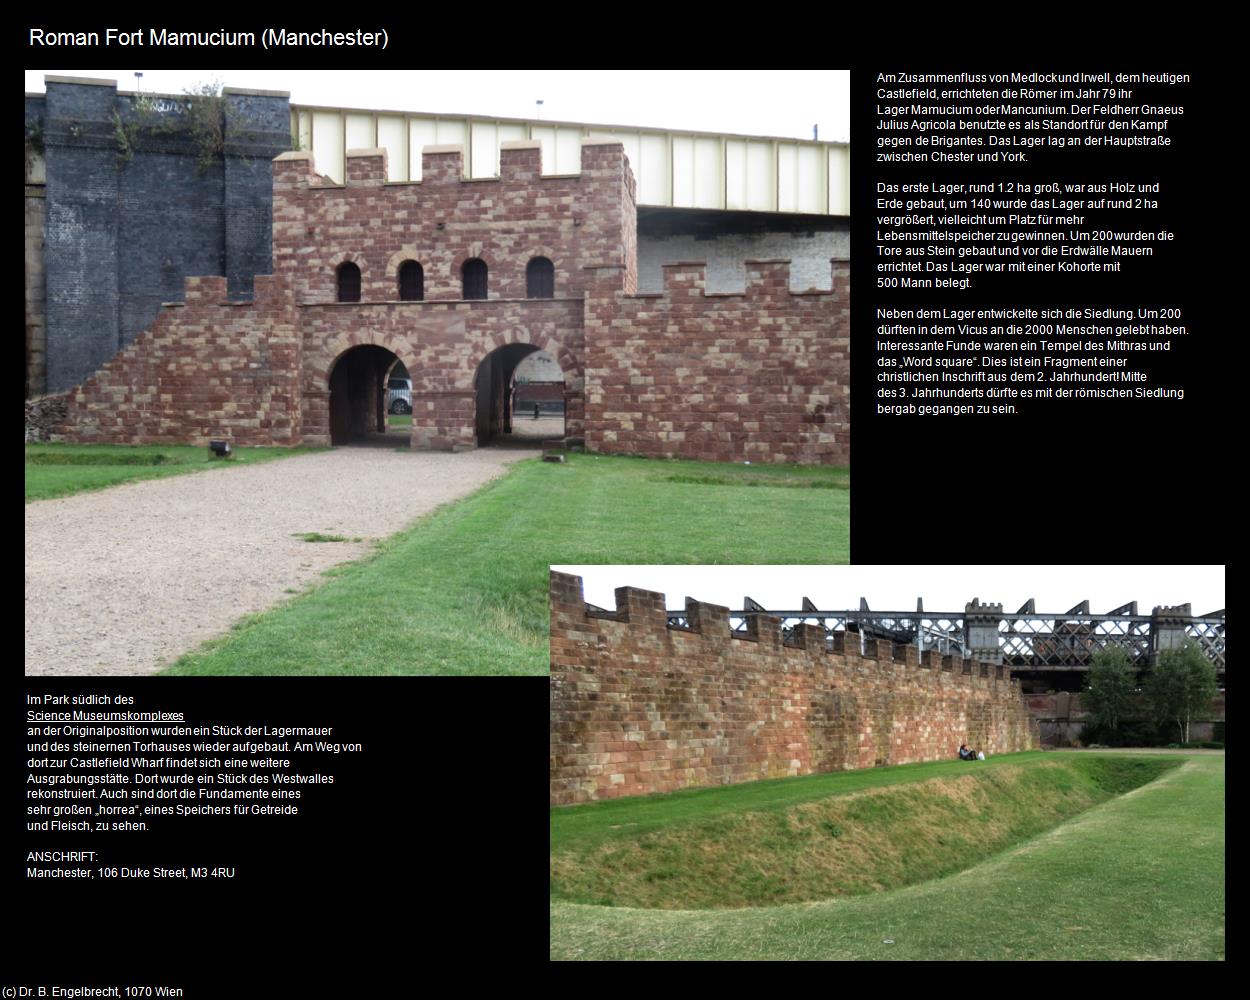 Roman Fort Mamucium  (Manchester, England  ) in Kulturatlas-ENGLAND und WALES(c)B.Engelbrecht